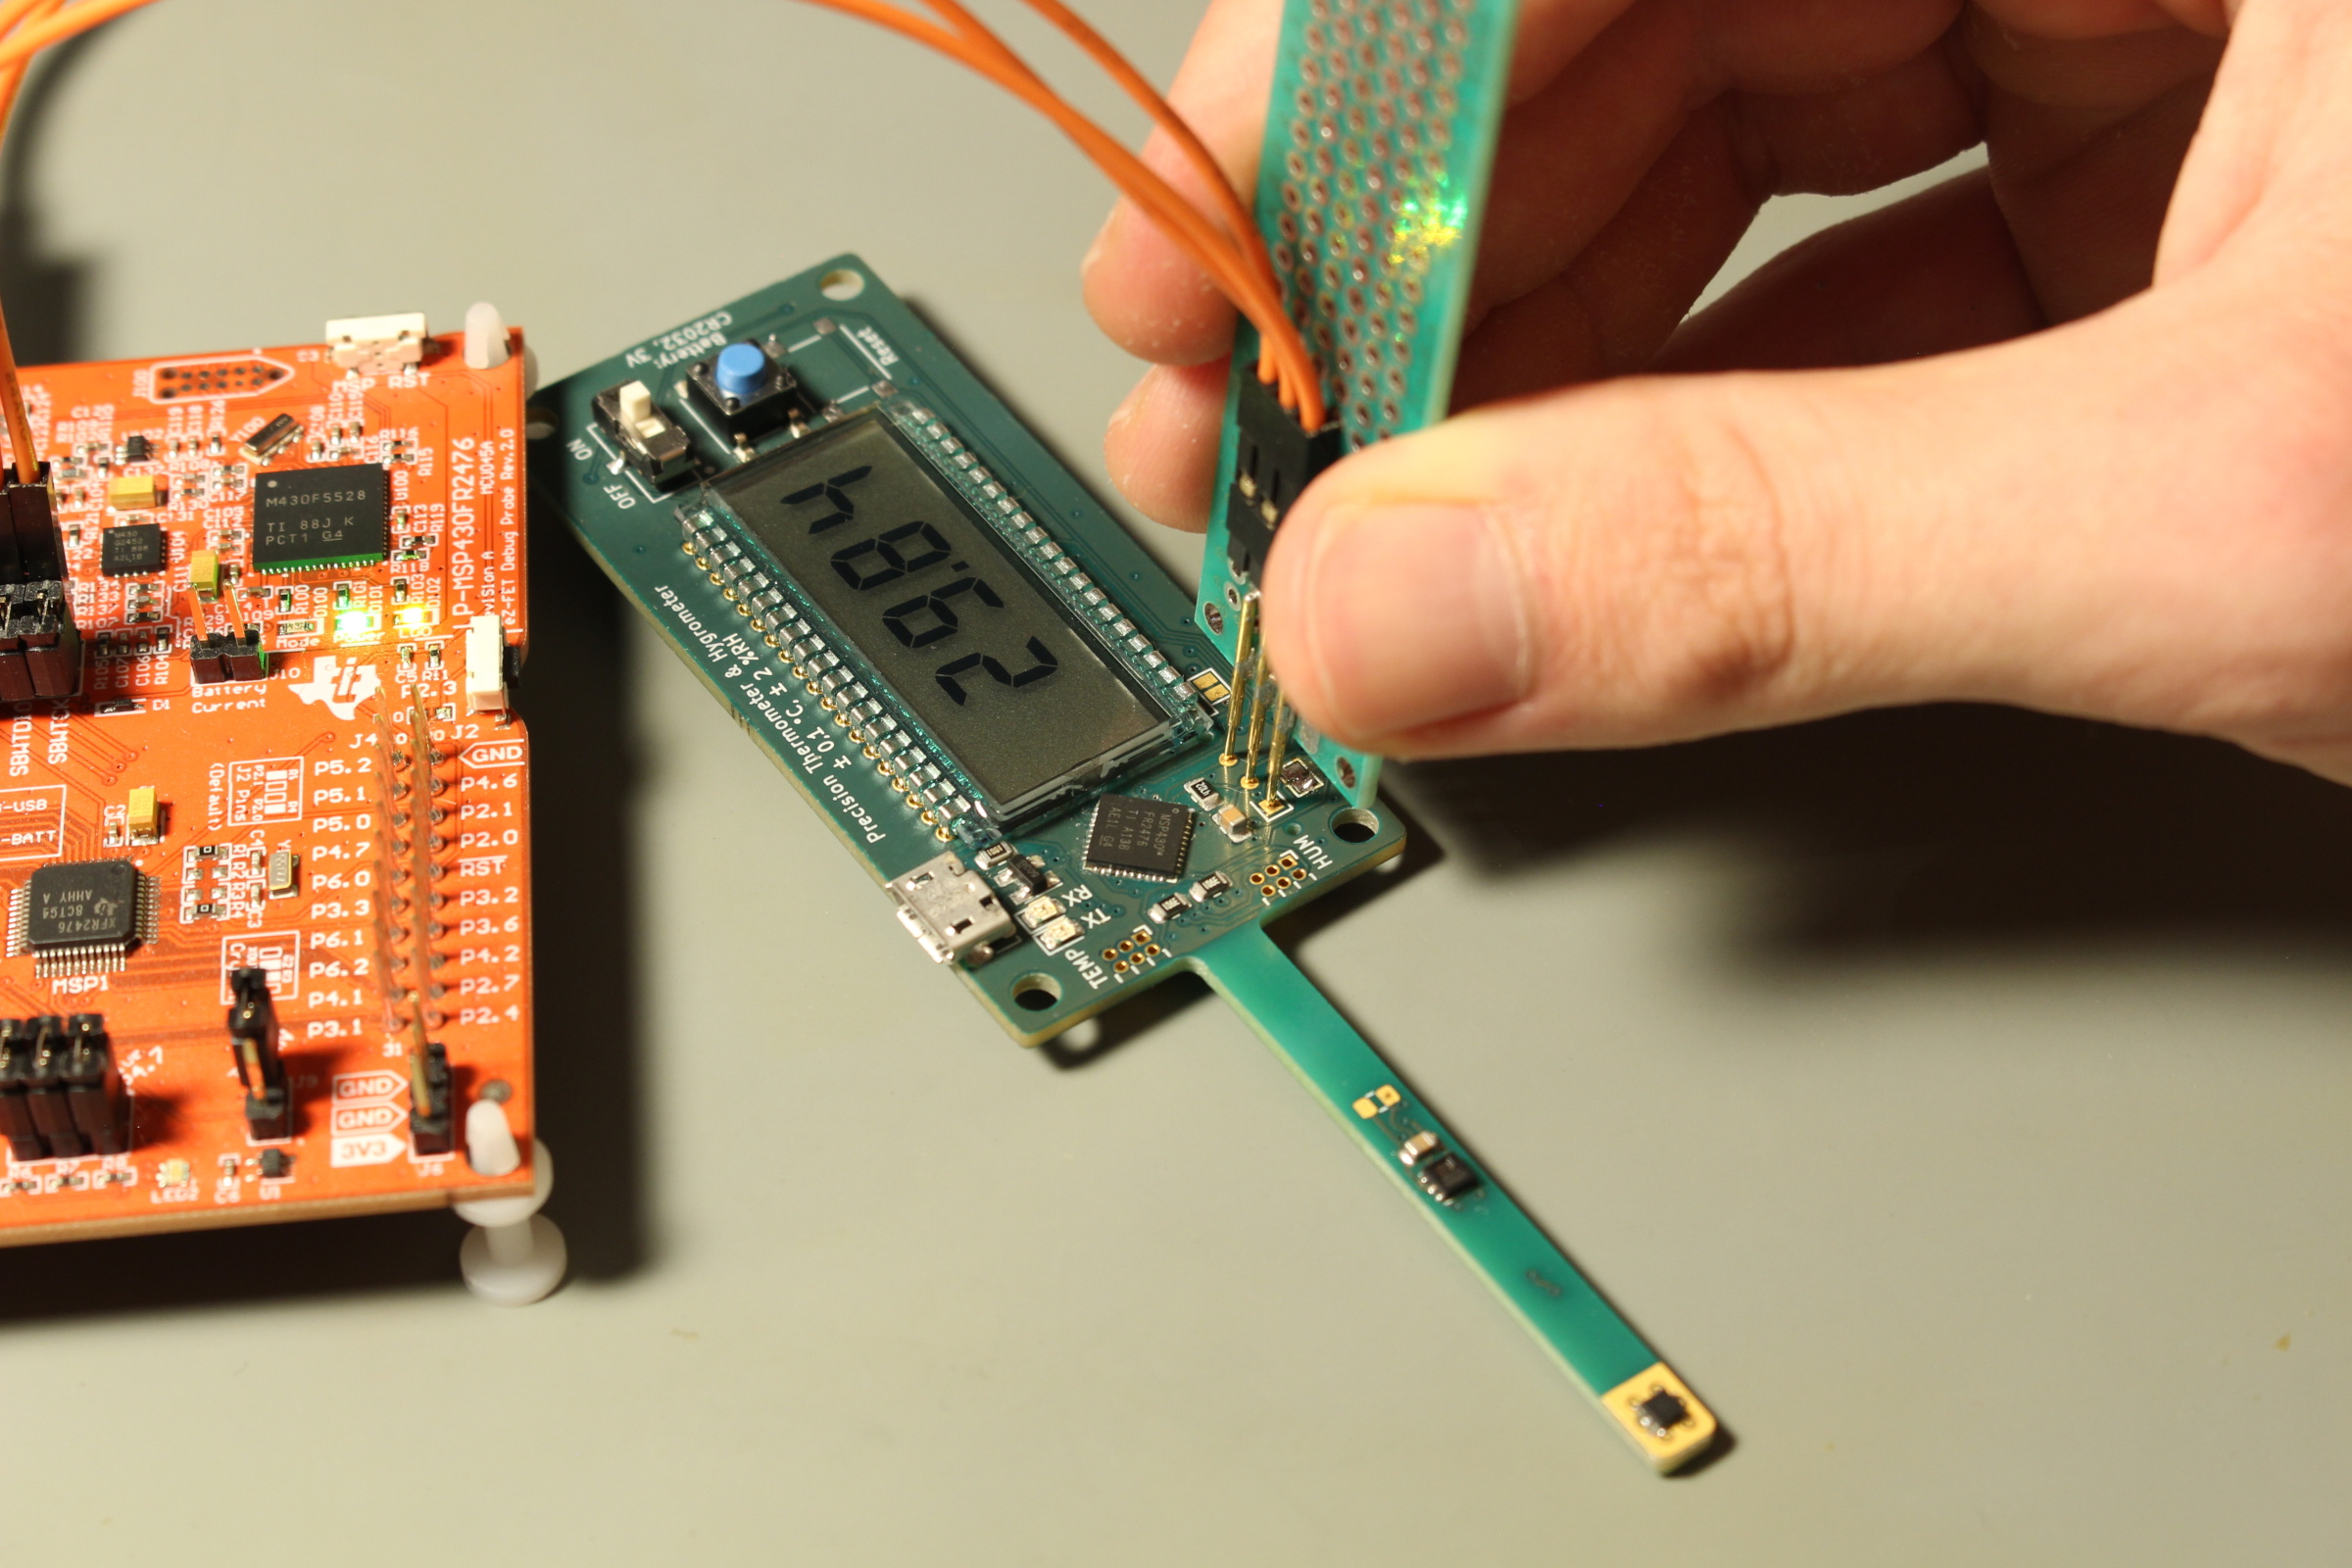 Programming and debugging using the custom pogo pin assembly